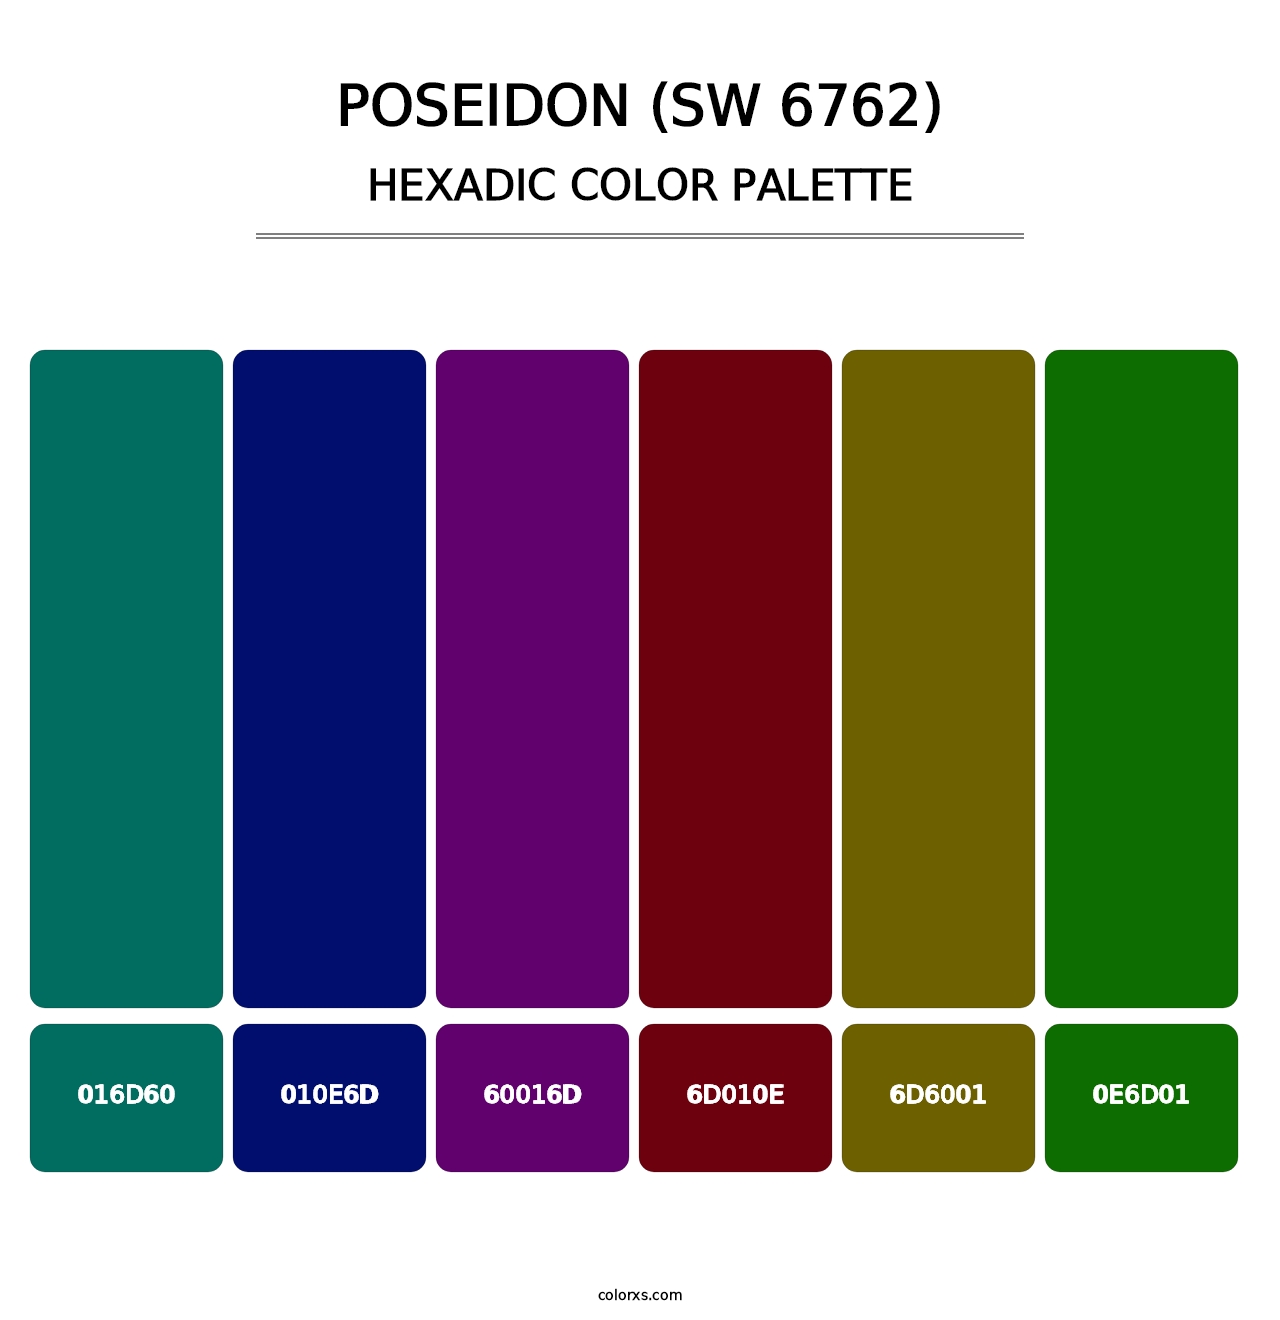 Poseidon (SW 6762) - Hexadic Color Palette